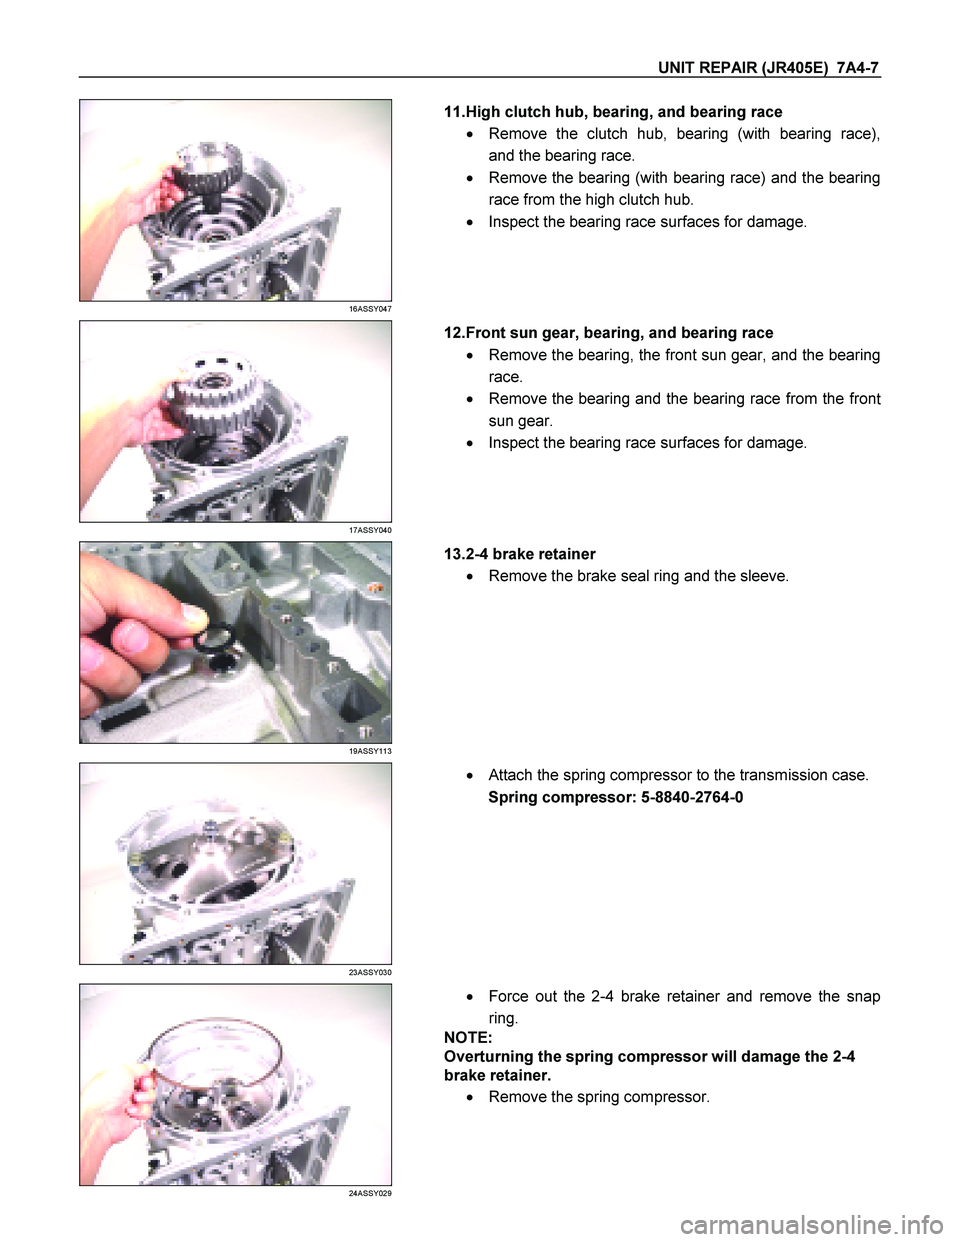 ISUZU TF SERIES 2004  Workshop Manual UNIT REPAIR (JR405E)  7A4-7 
 
16ASSY047 
  
   11.High clutch hub, bearing, and bearing race  
   Remove the clutch hub, bearing (with bearing race),  
and the bearing race. 
    Remove the bearing